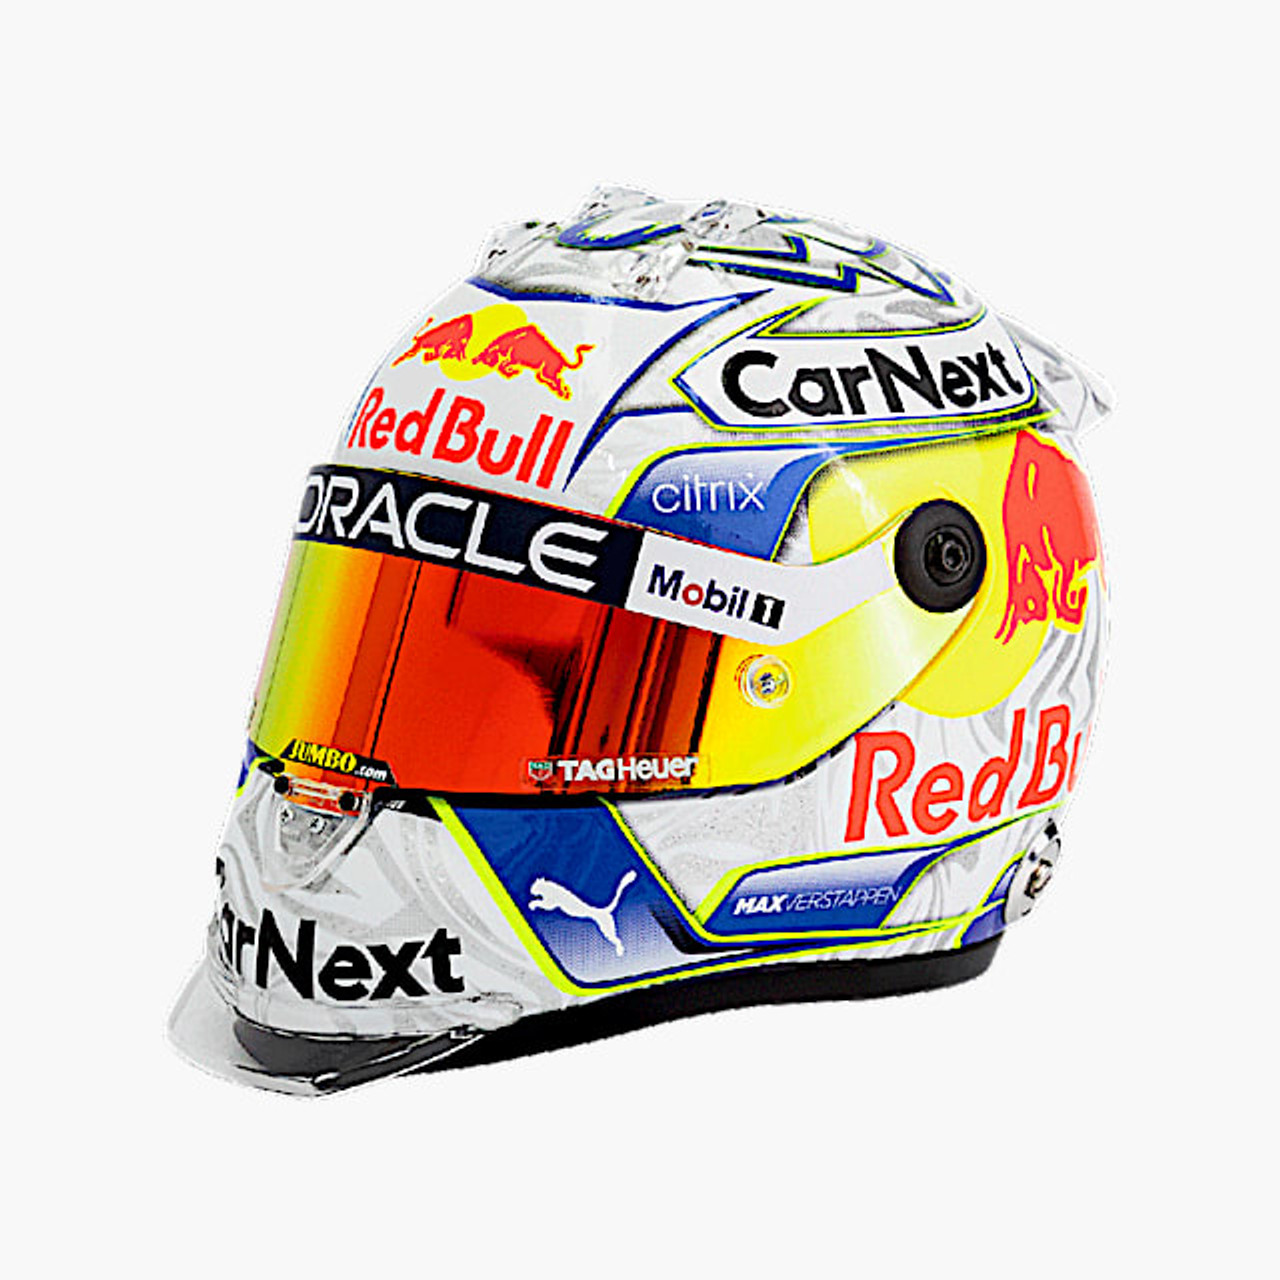 Max Verstappen 307 Deluxe Rides Figure, Formula 1 Figure